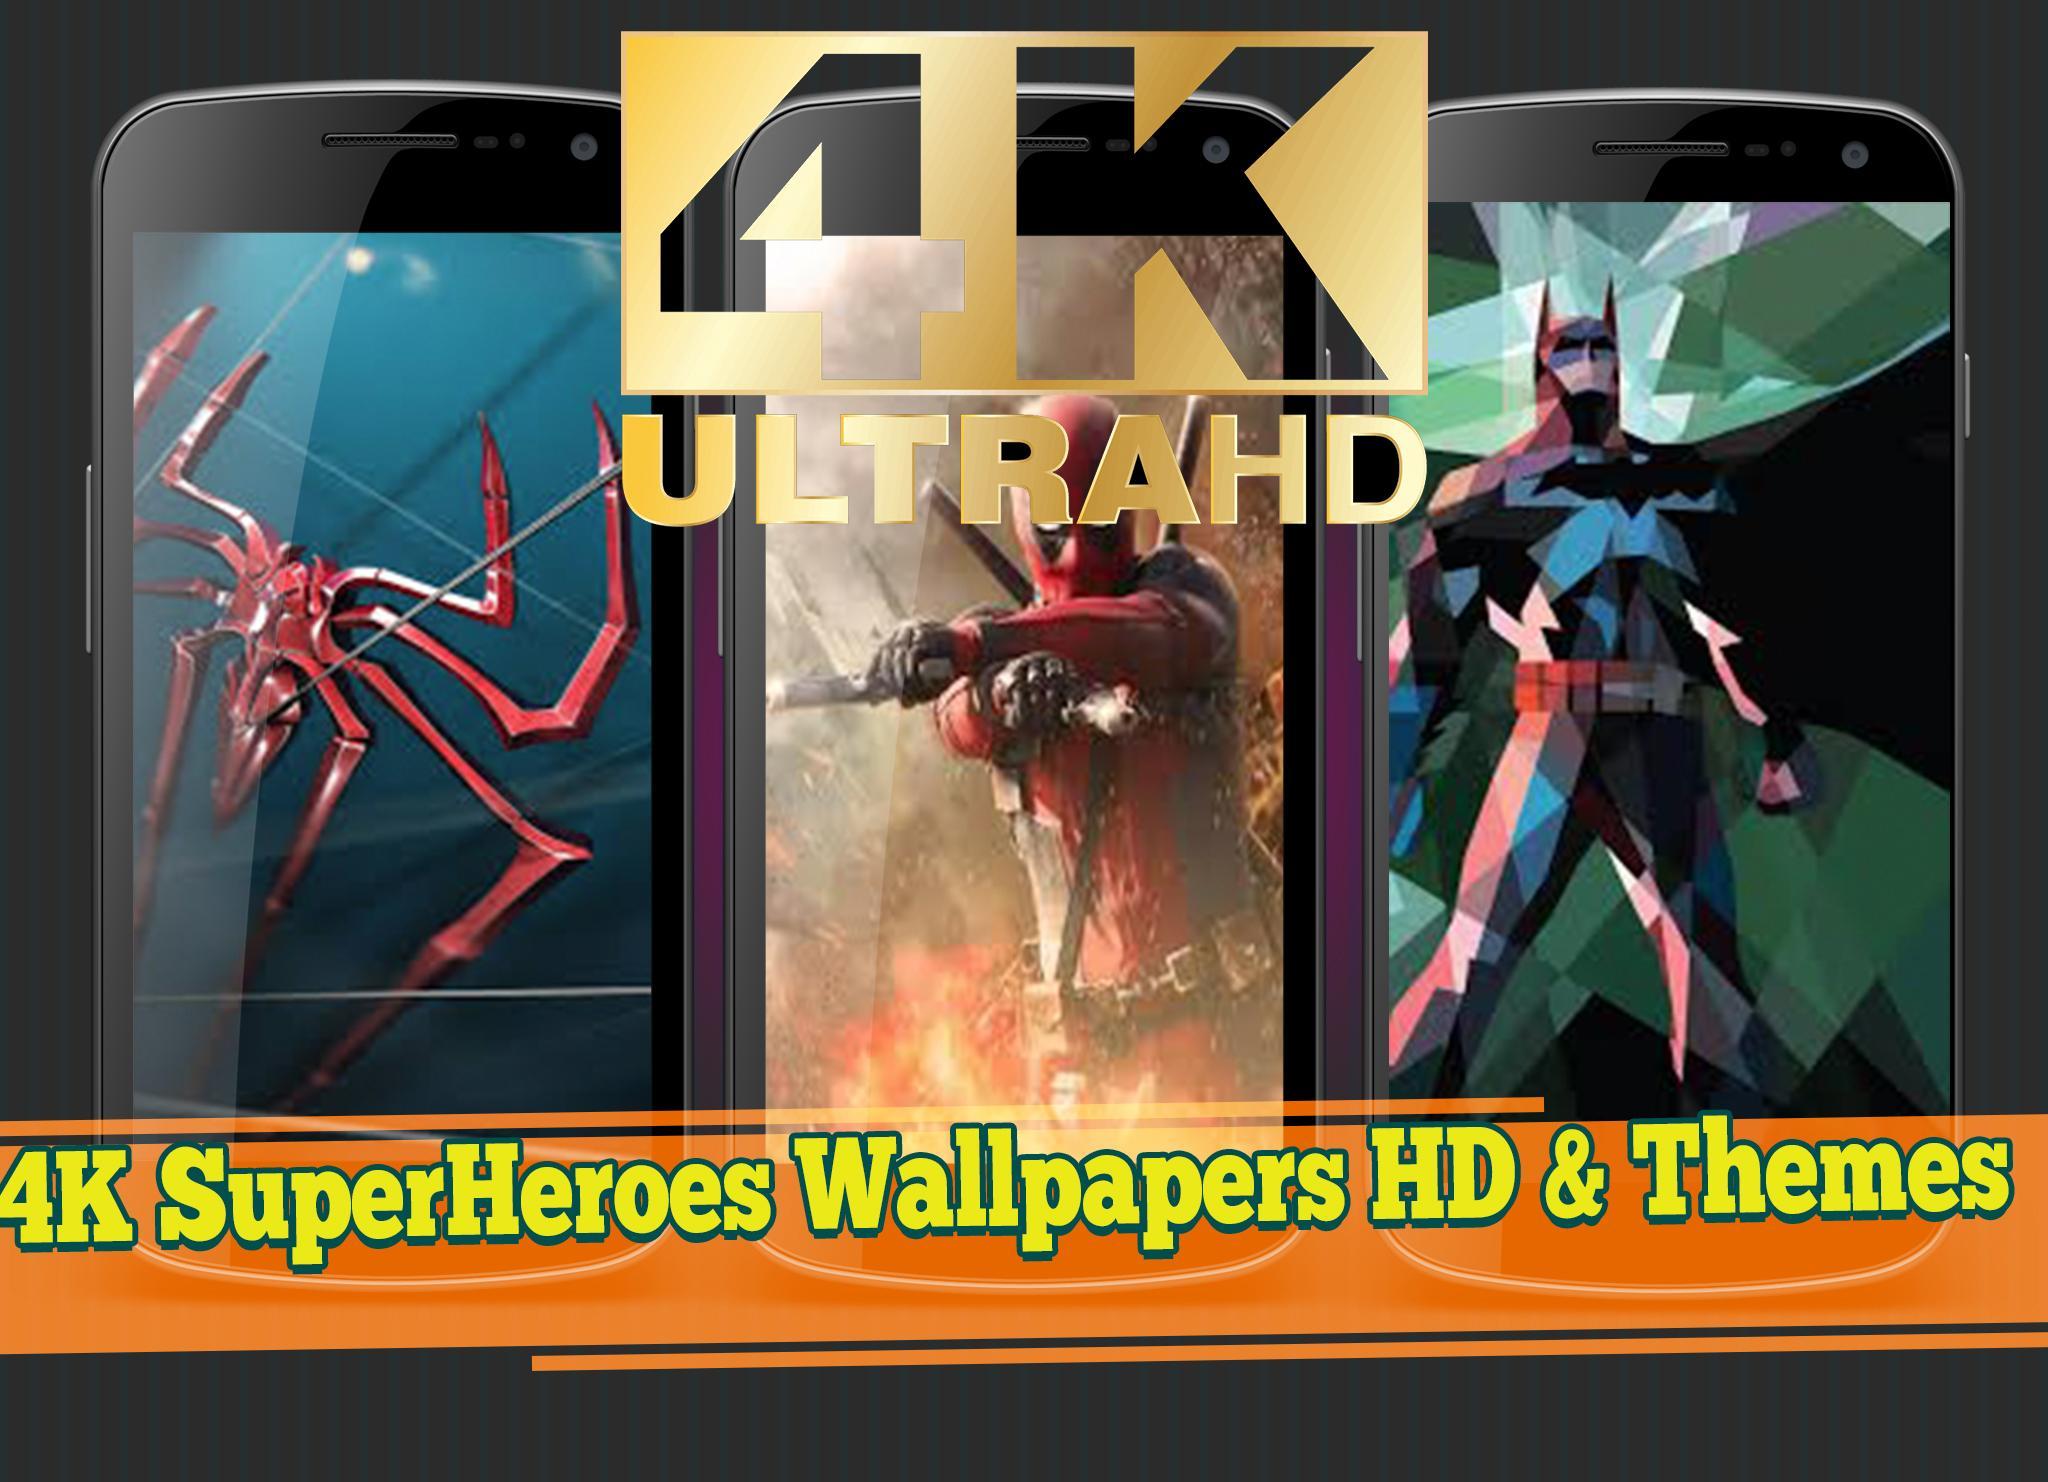 4k Superhero 4k Wallpapers Hd Theme Superhero For Android Apk Download